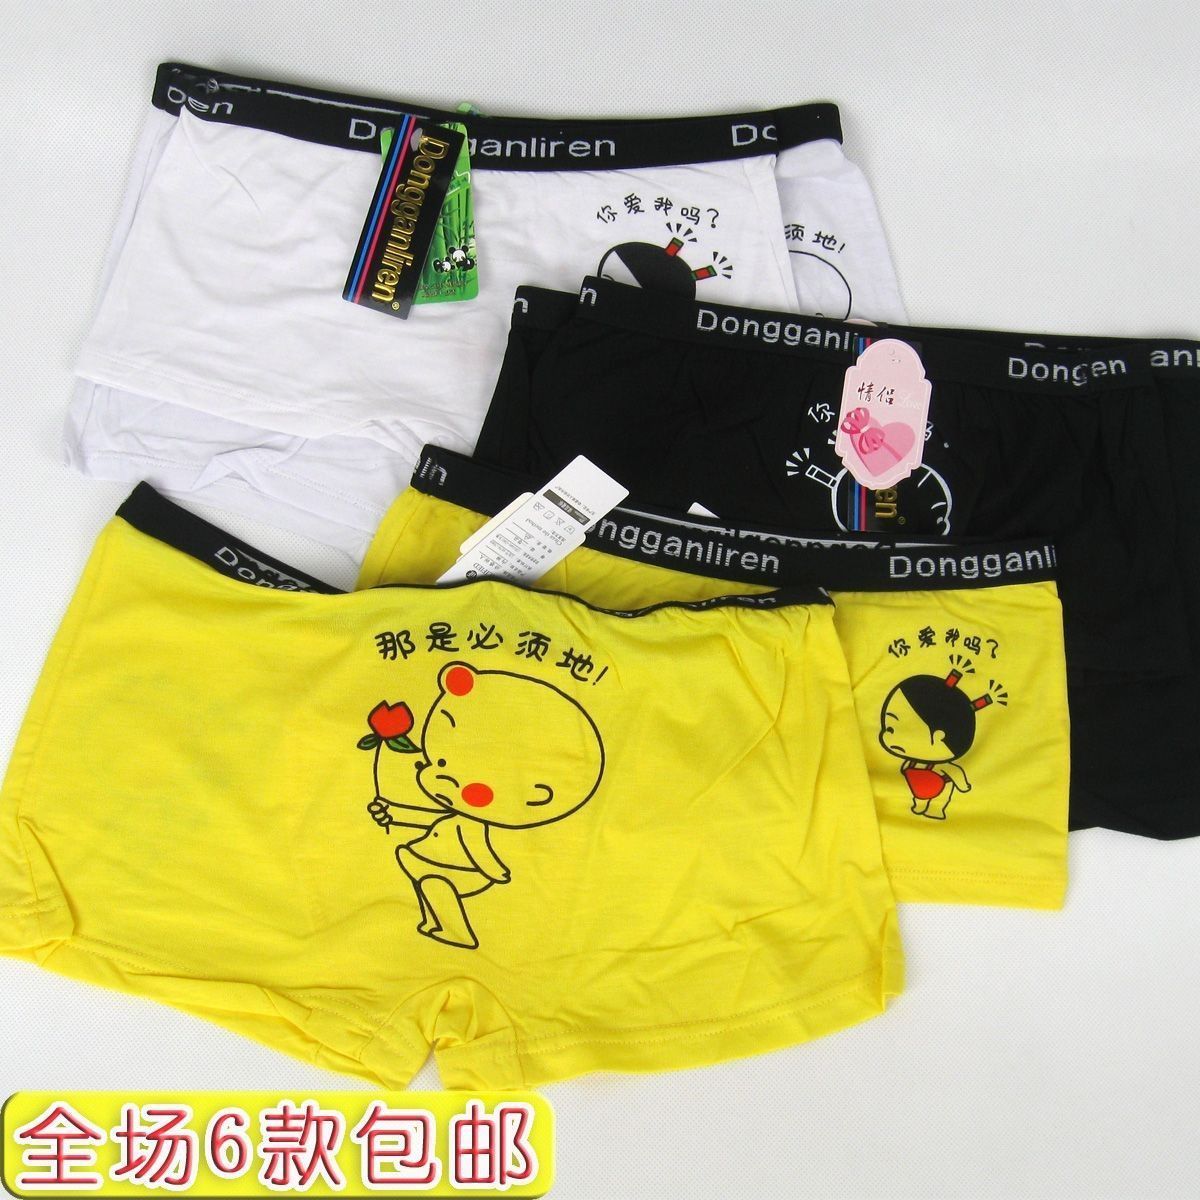 527 # got picking bamboo fiber underwear cartoon style "women 's men' s boxer